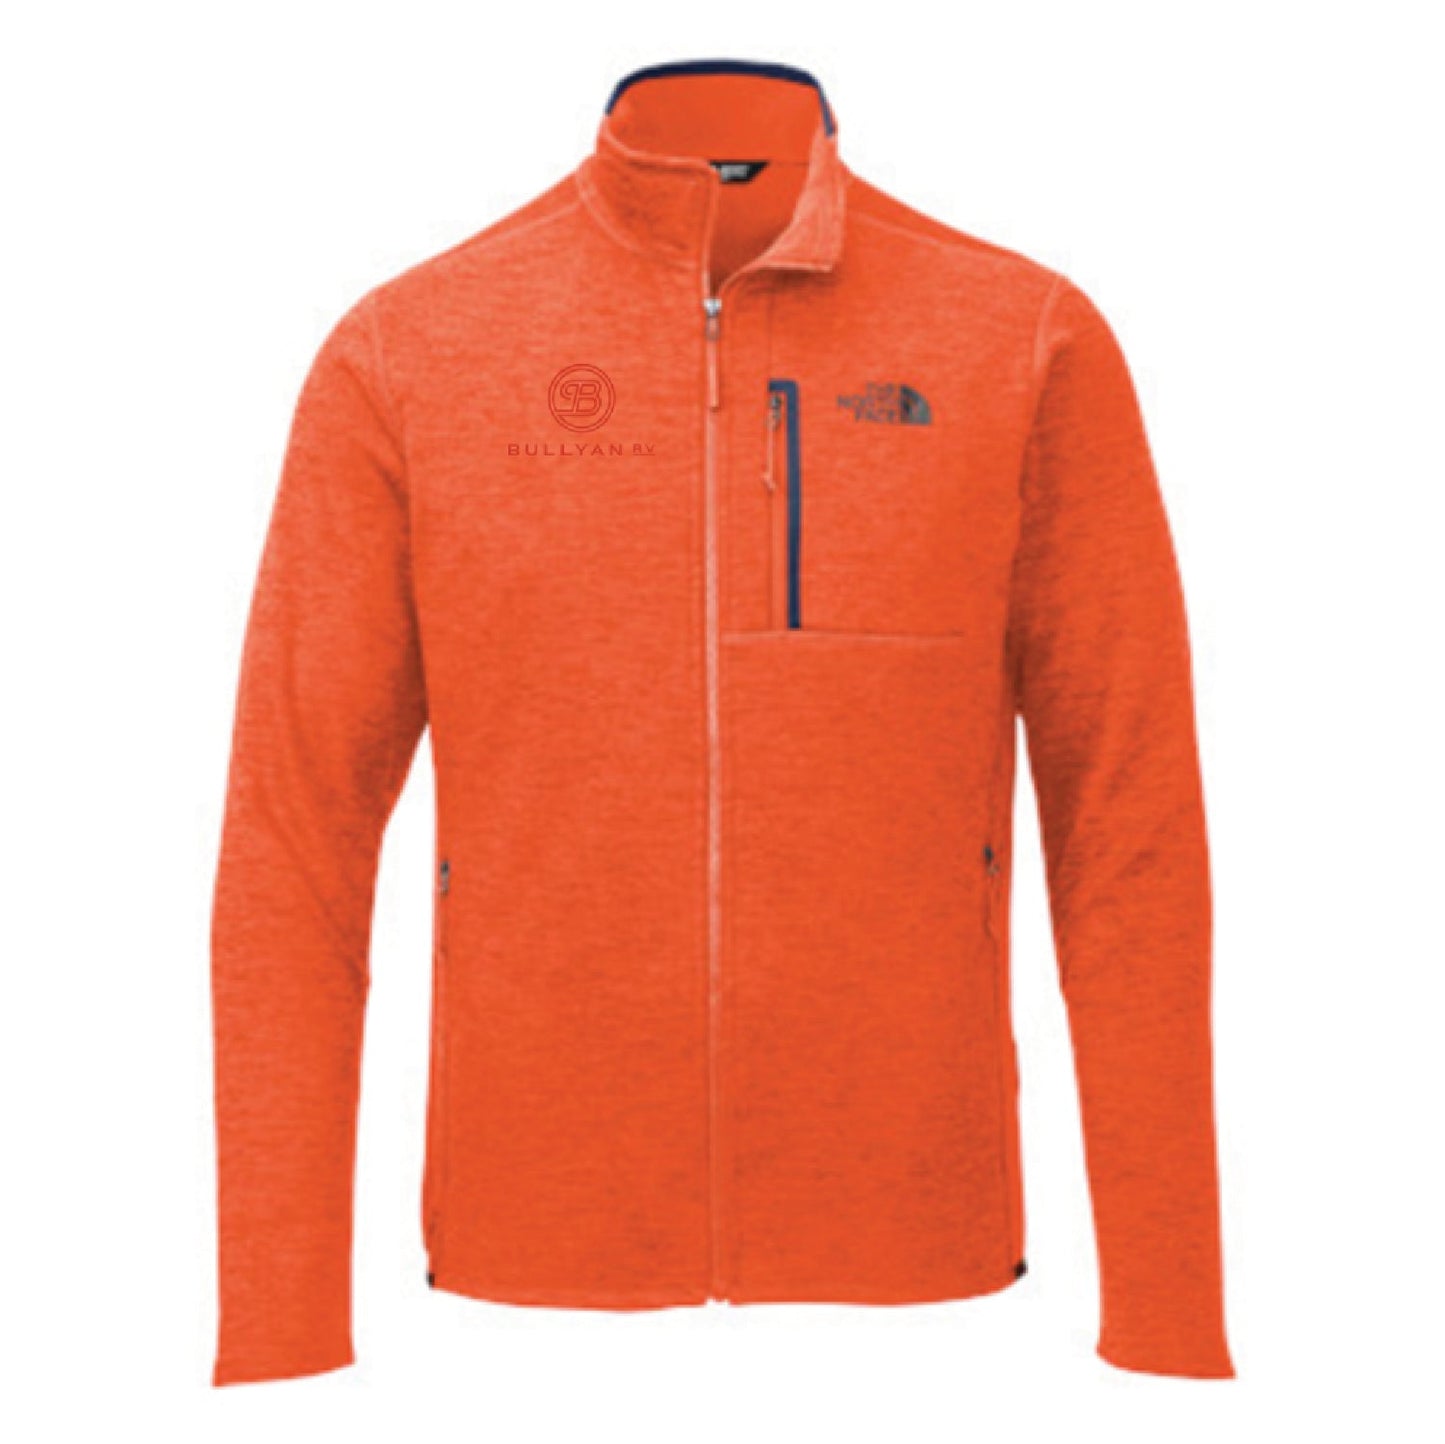 Bullyan RV The North Face ® Skyline Full-Zip Fleece Jacket - DSP On Demand